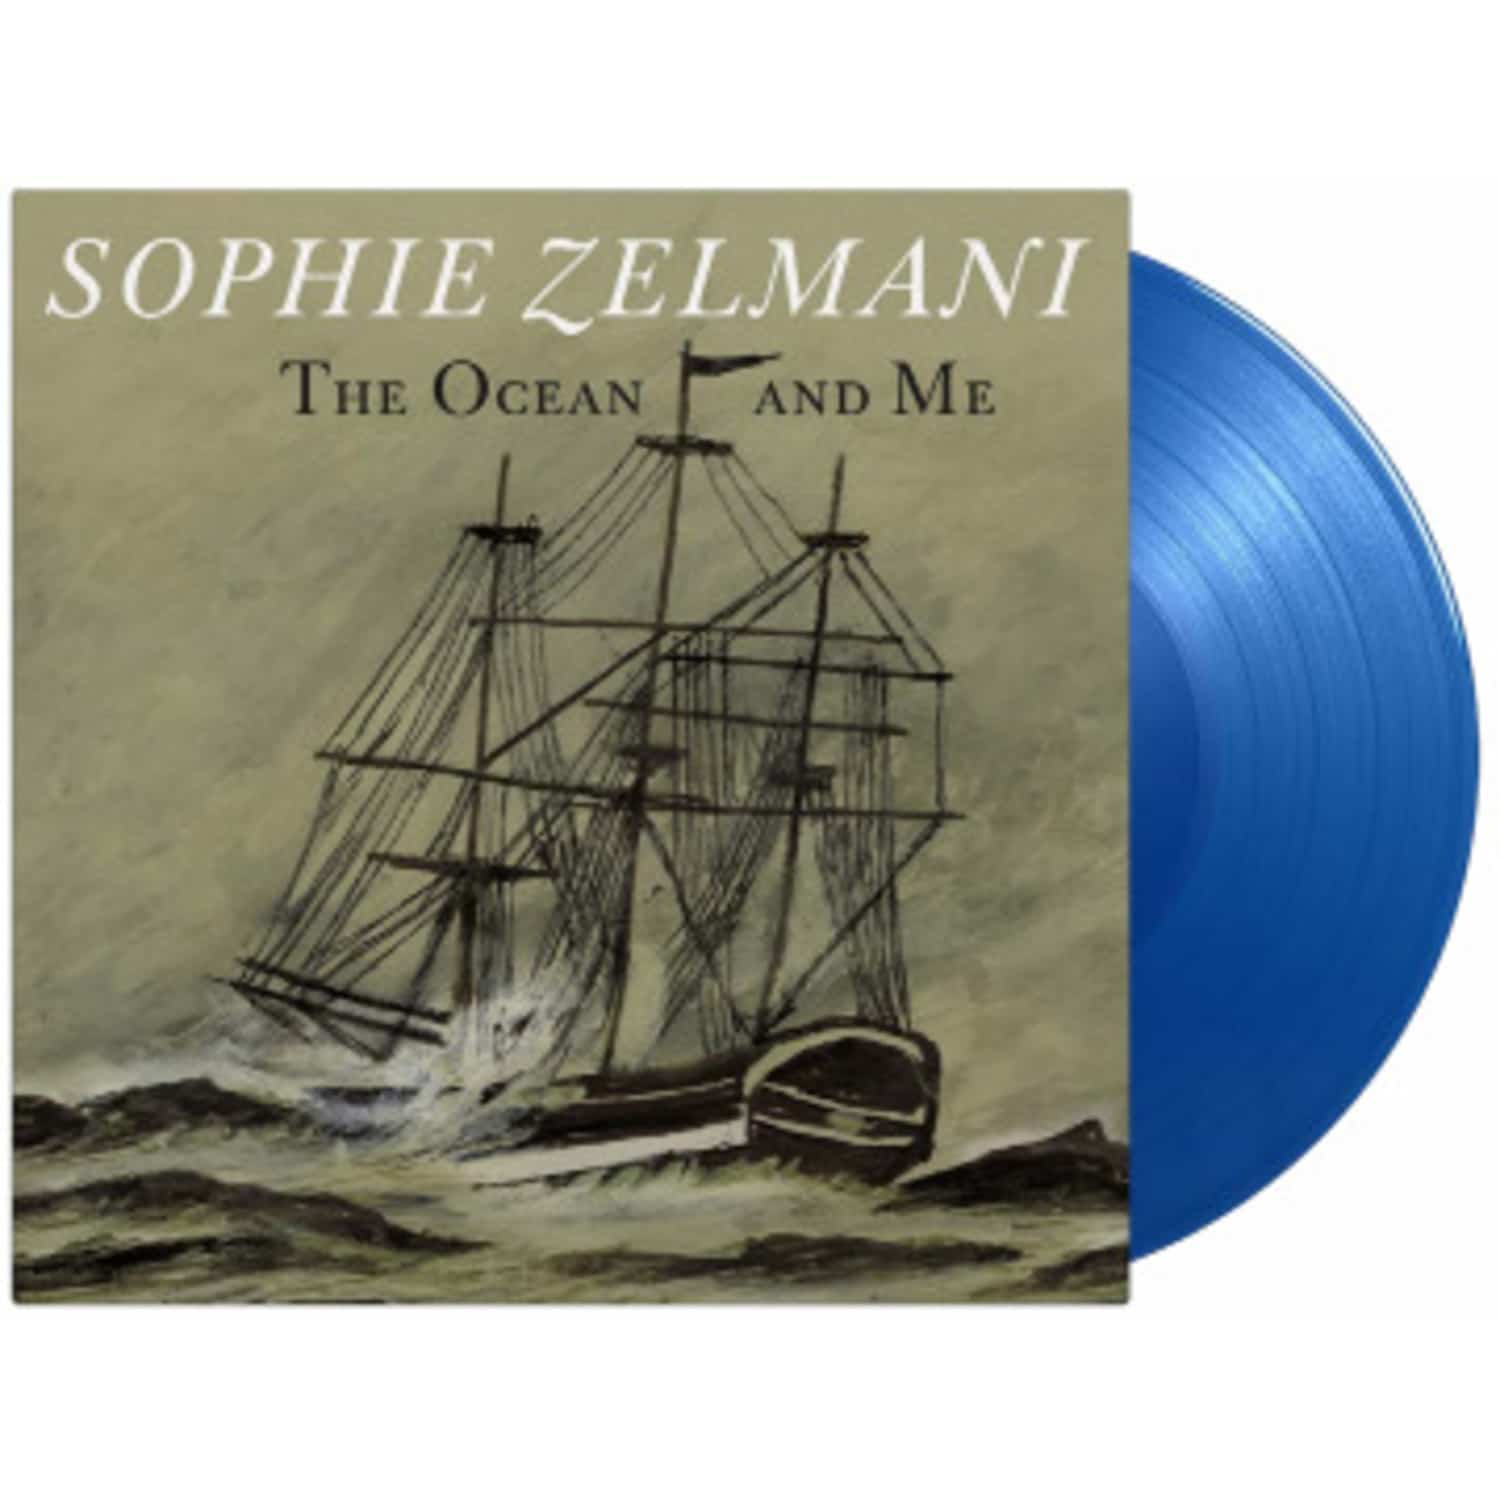 Sophie Zelmani - OCEAN AND ME 